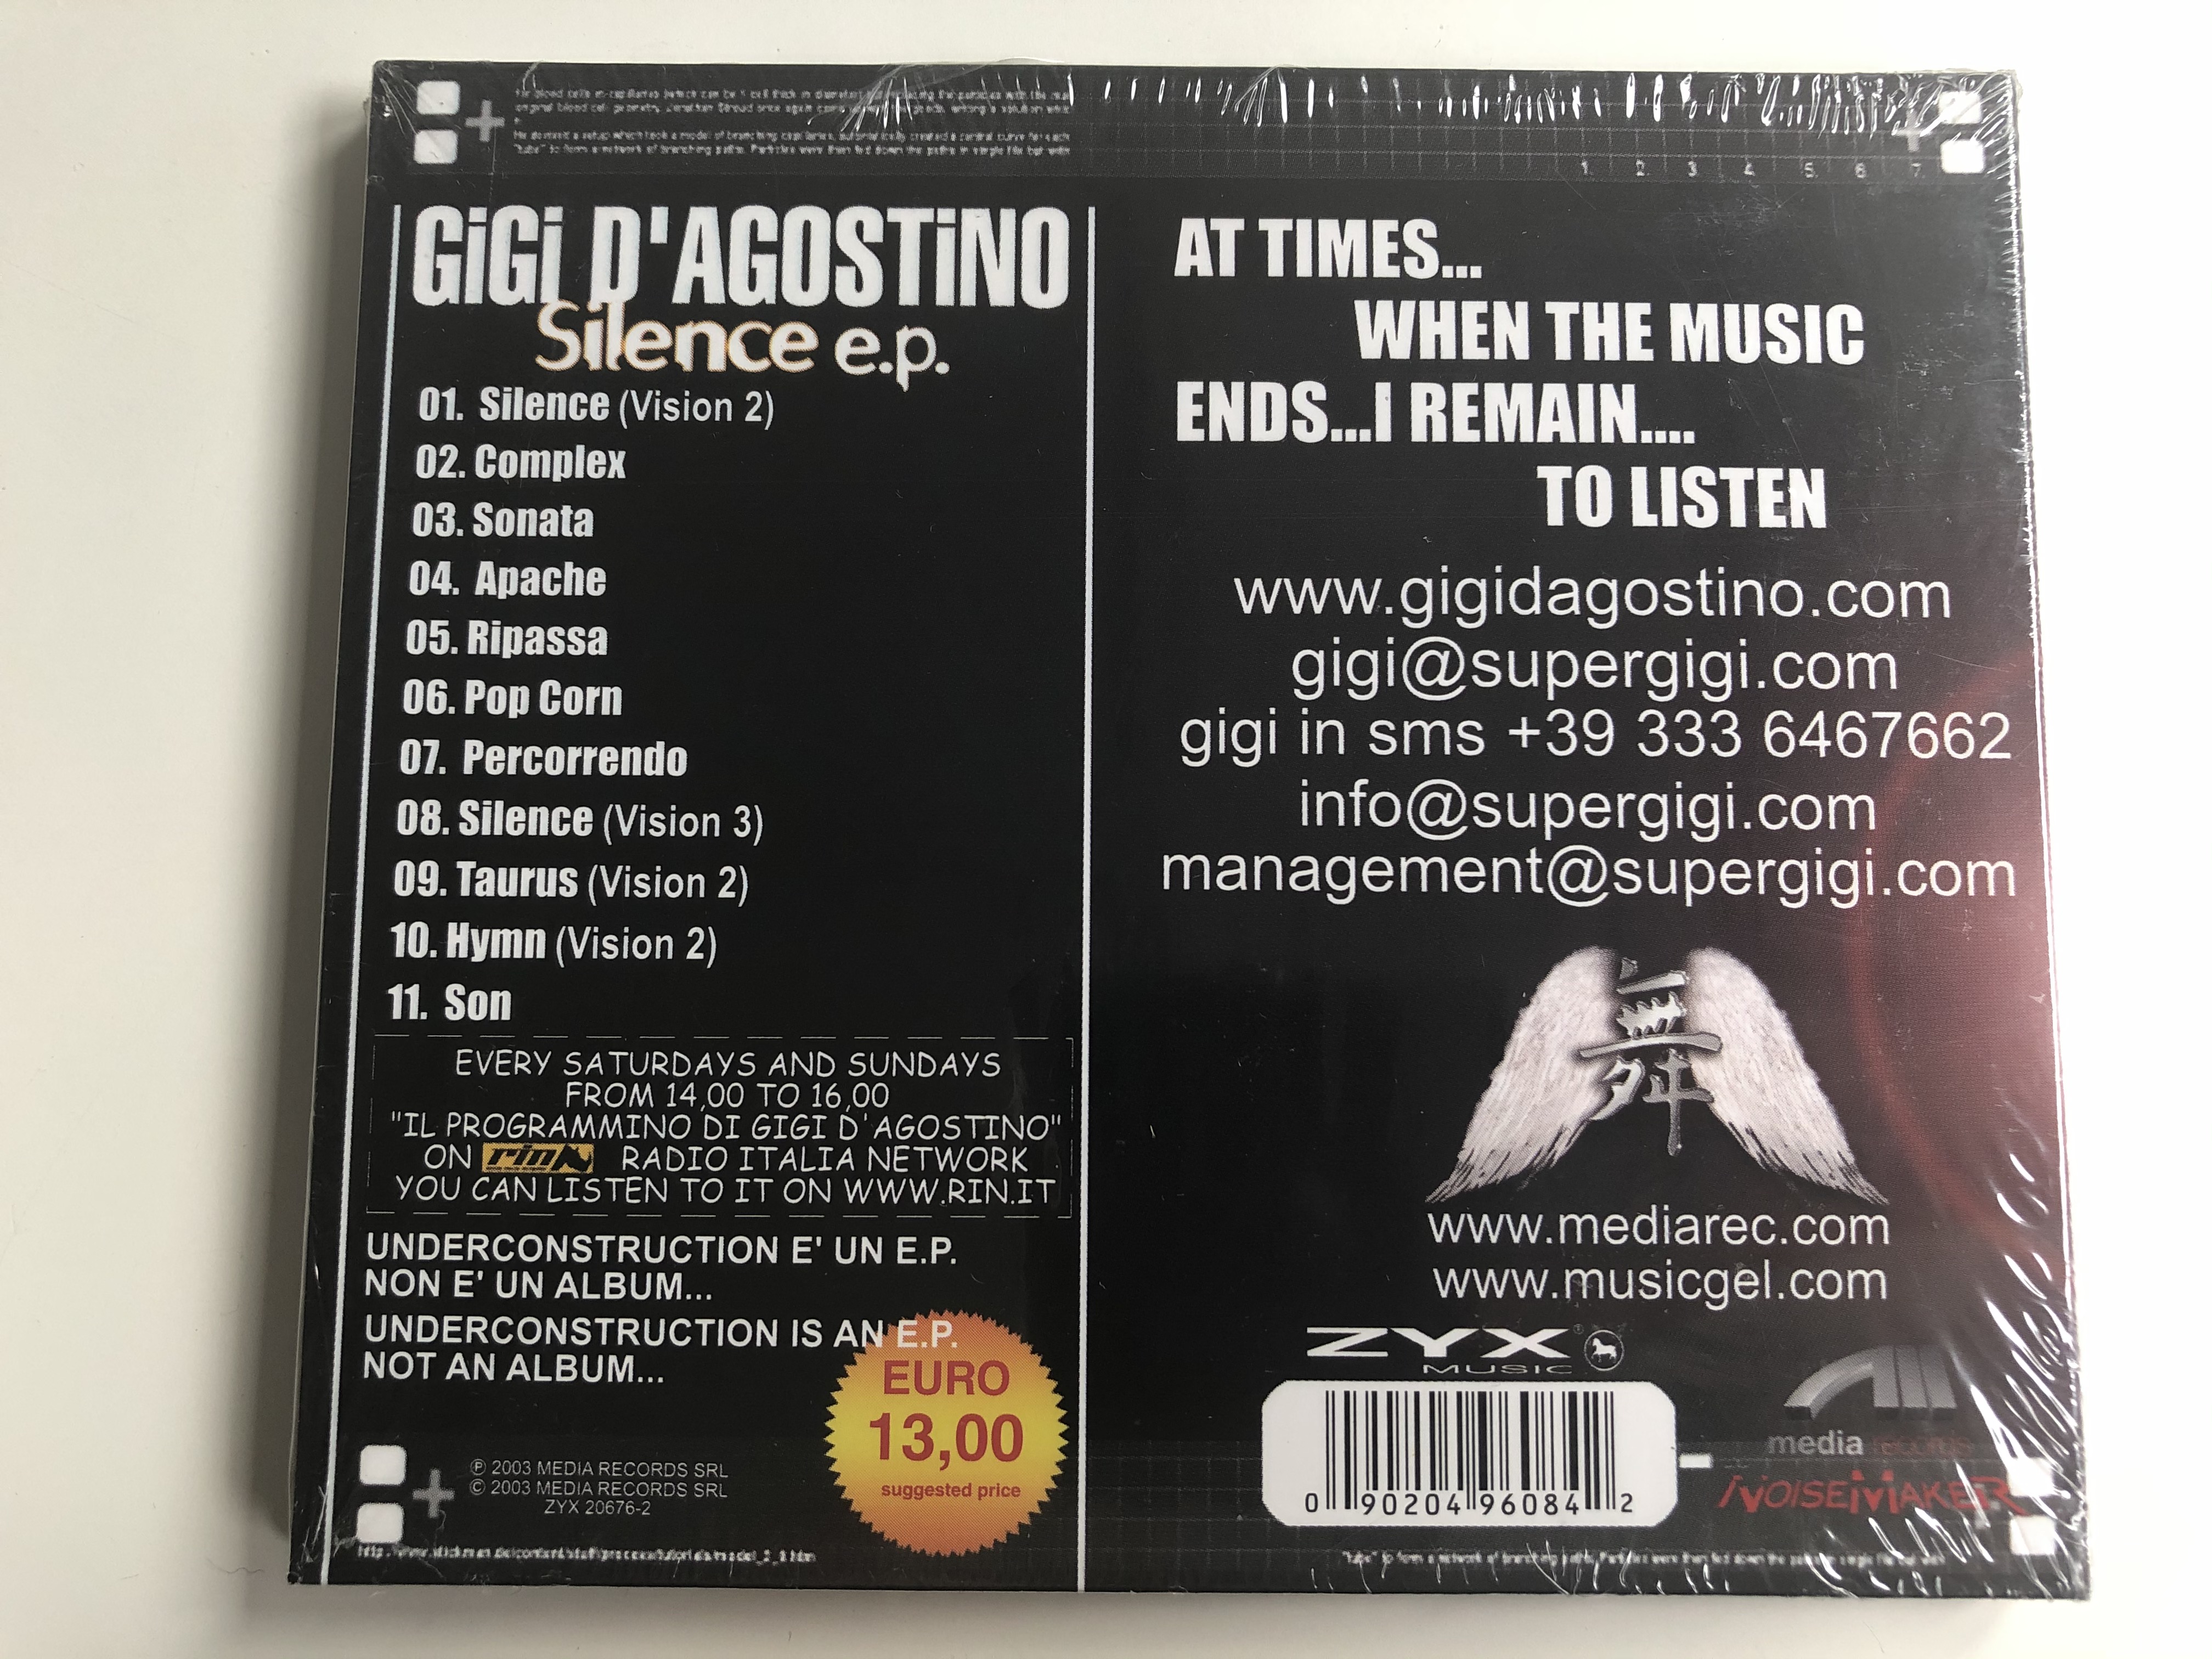 silence-e.p.-underconstruction-1-gigi-d-agostino-zyx-music-audio-cd-2003-zyx-20676-2-2-.jpg